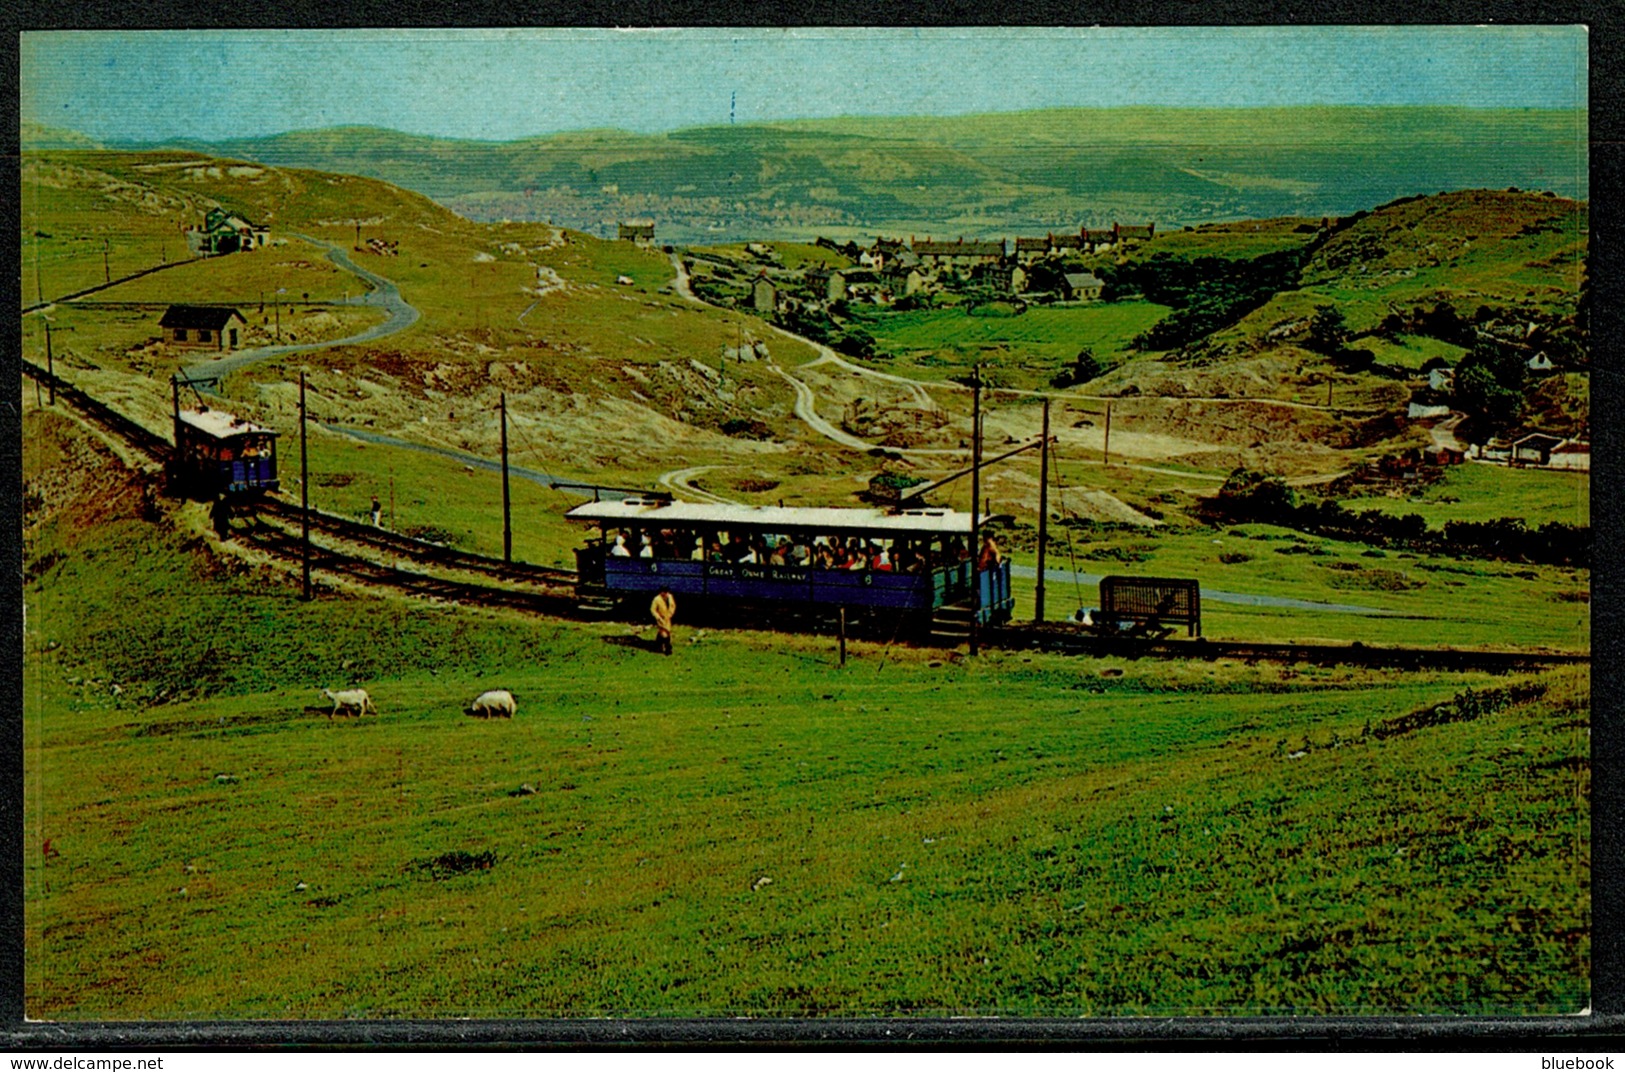 Ref 1300 - Postcard - Passing Point On Great Orme Railway - Llandudno Caernarvonshire Wales - Caernarvonshire